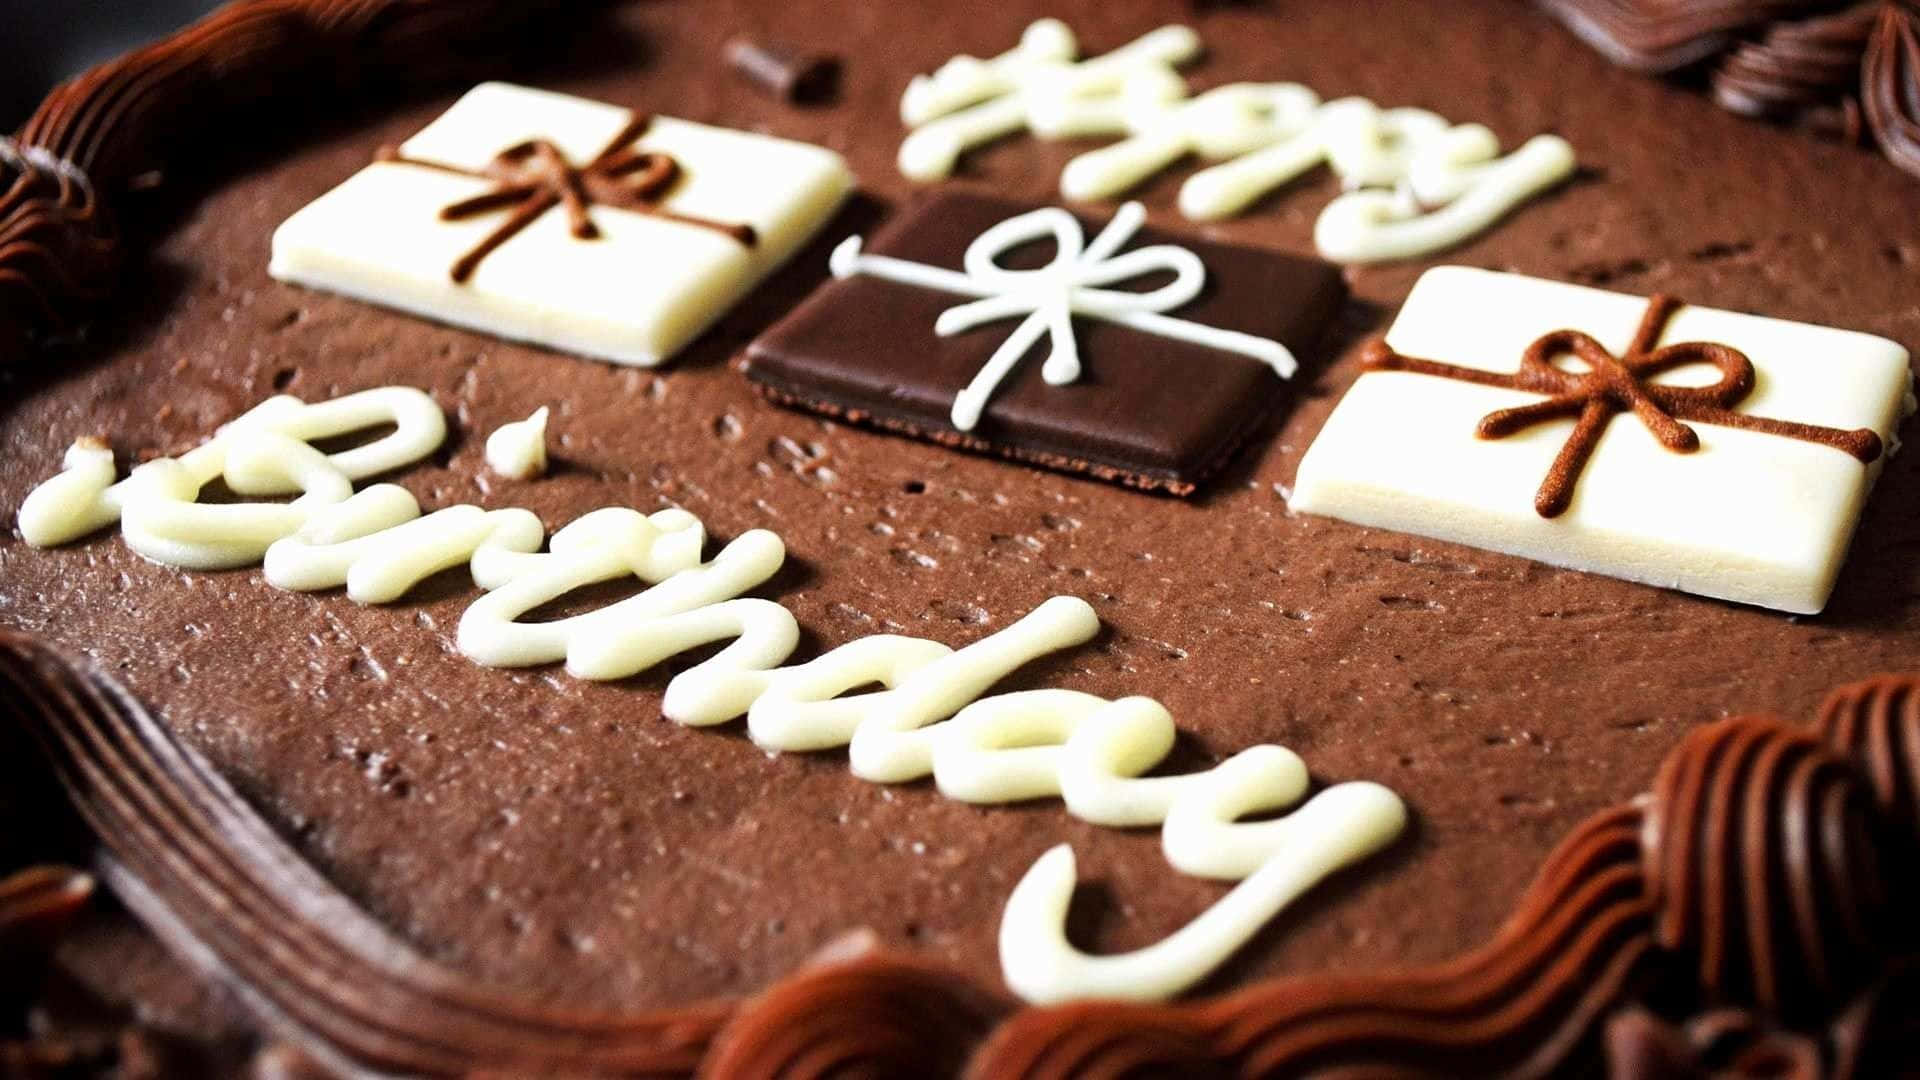 Мужчина 22 дня рождения. Шоколад "с днем рождения!". Торт с днем рождения!. Открытка с шоколадом. Шоколадный день рождения.